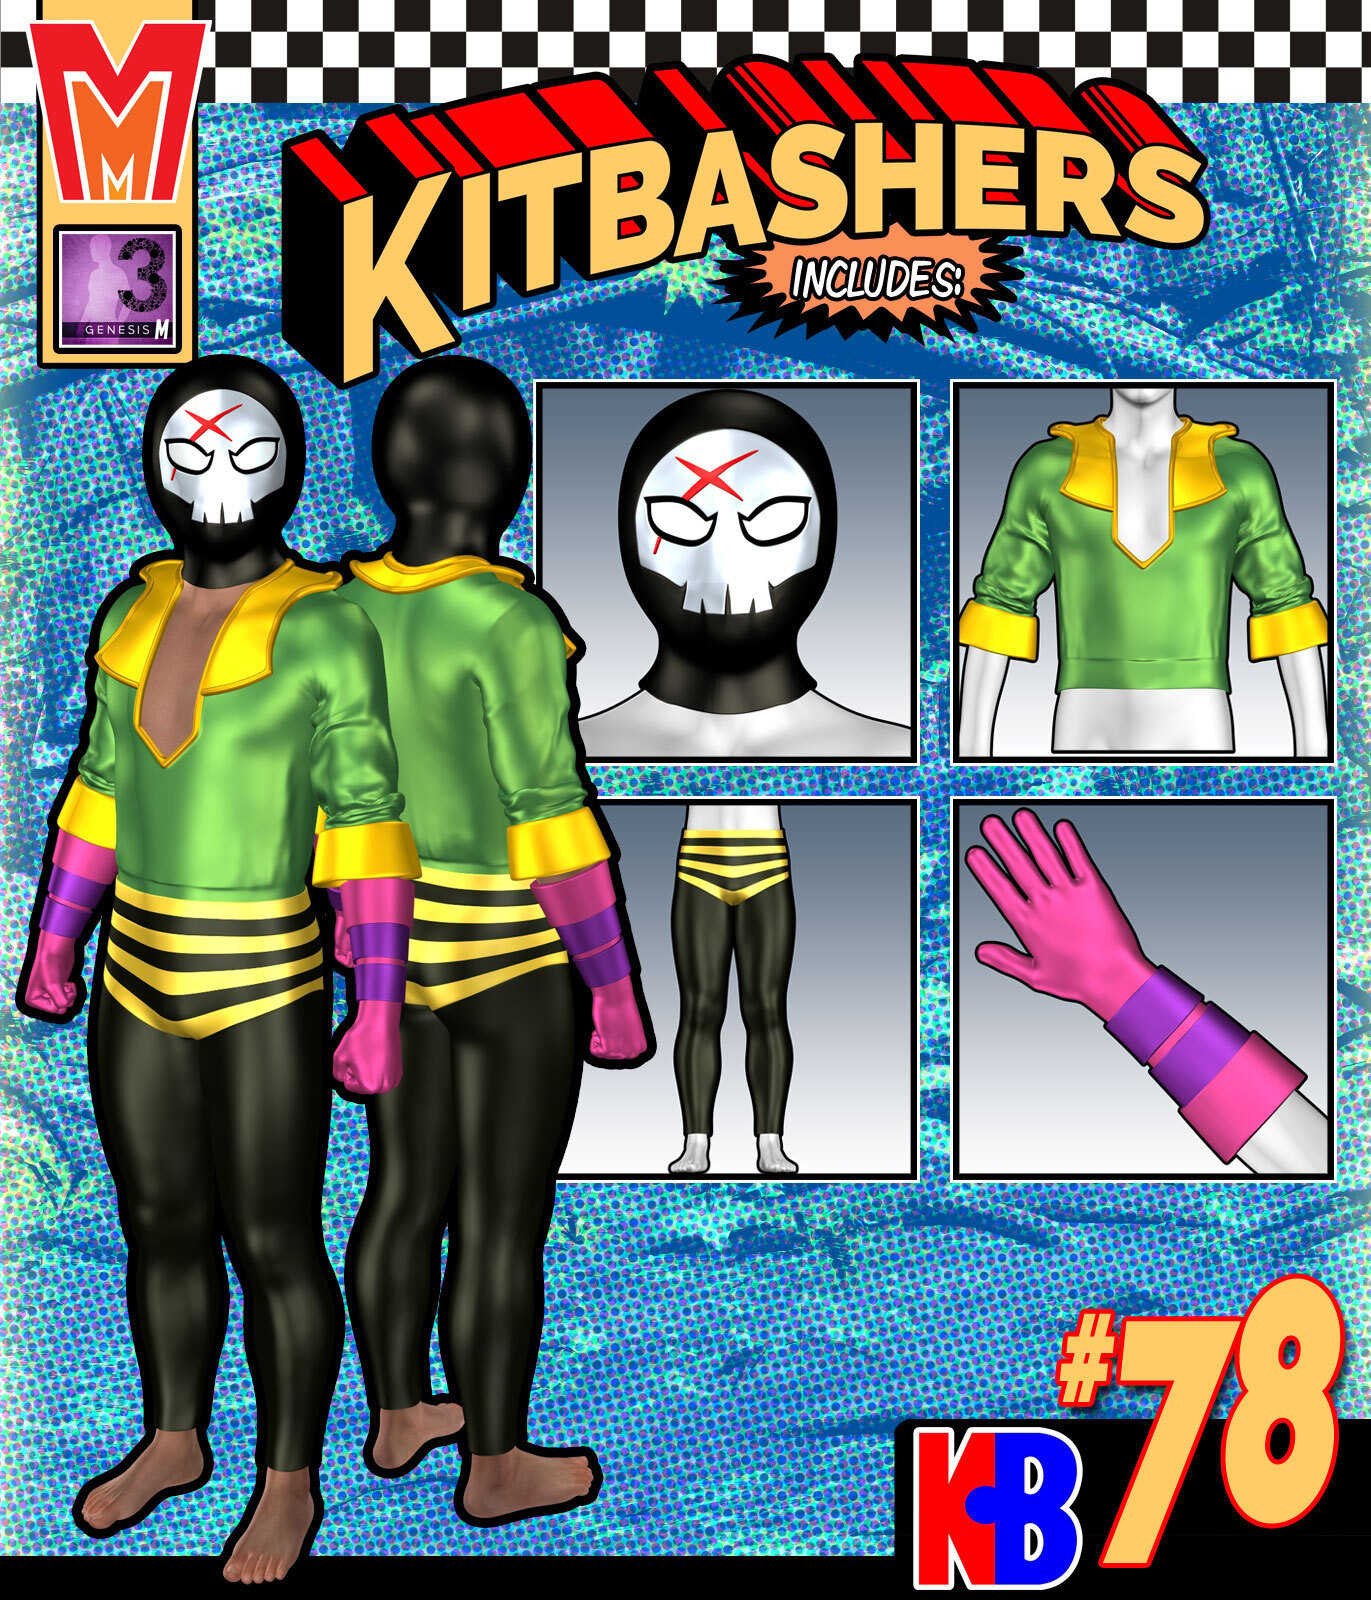 Kitbashers 078 MMG3M by: MightyMite, 3D Models by Daz 3D